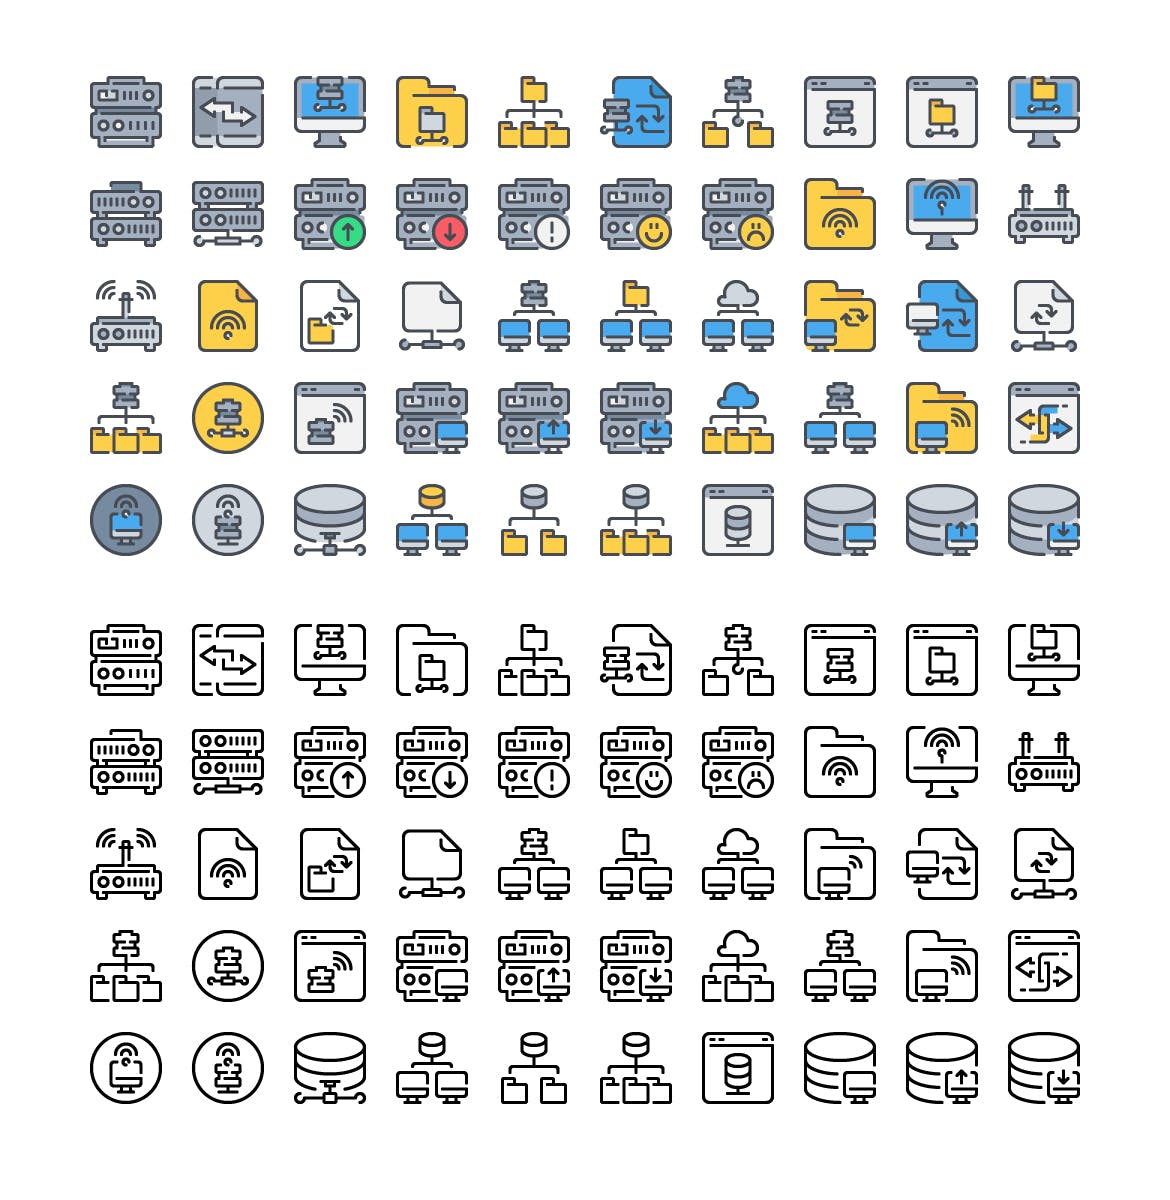 50枚网络与数据库矢量图标素材 50 Network and Database icon set插图(2)